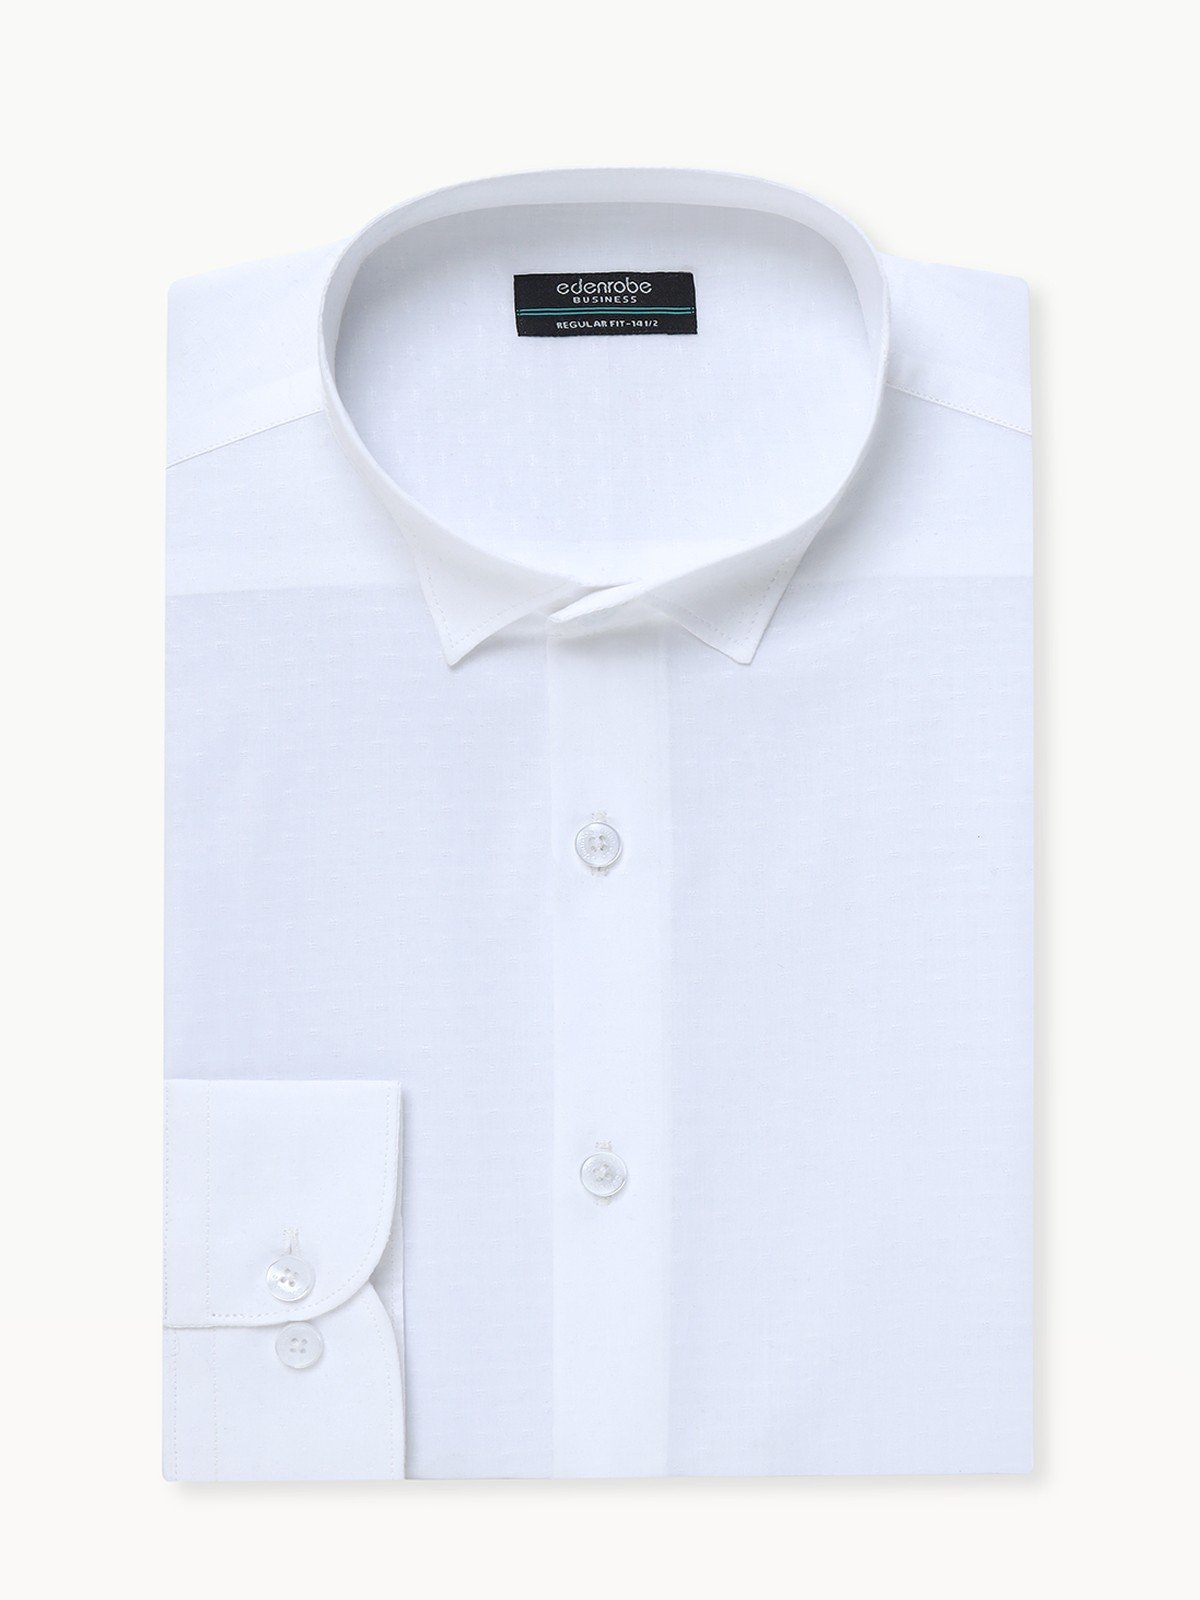 Men's Off White Shirt - EMTSB22-119